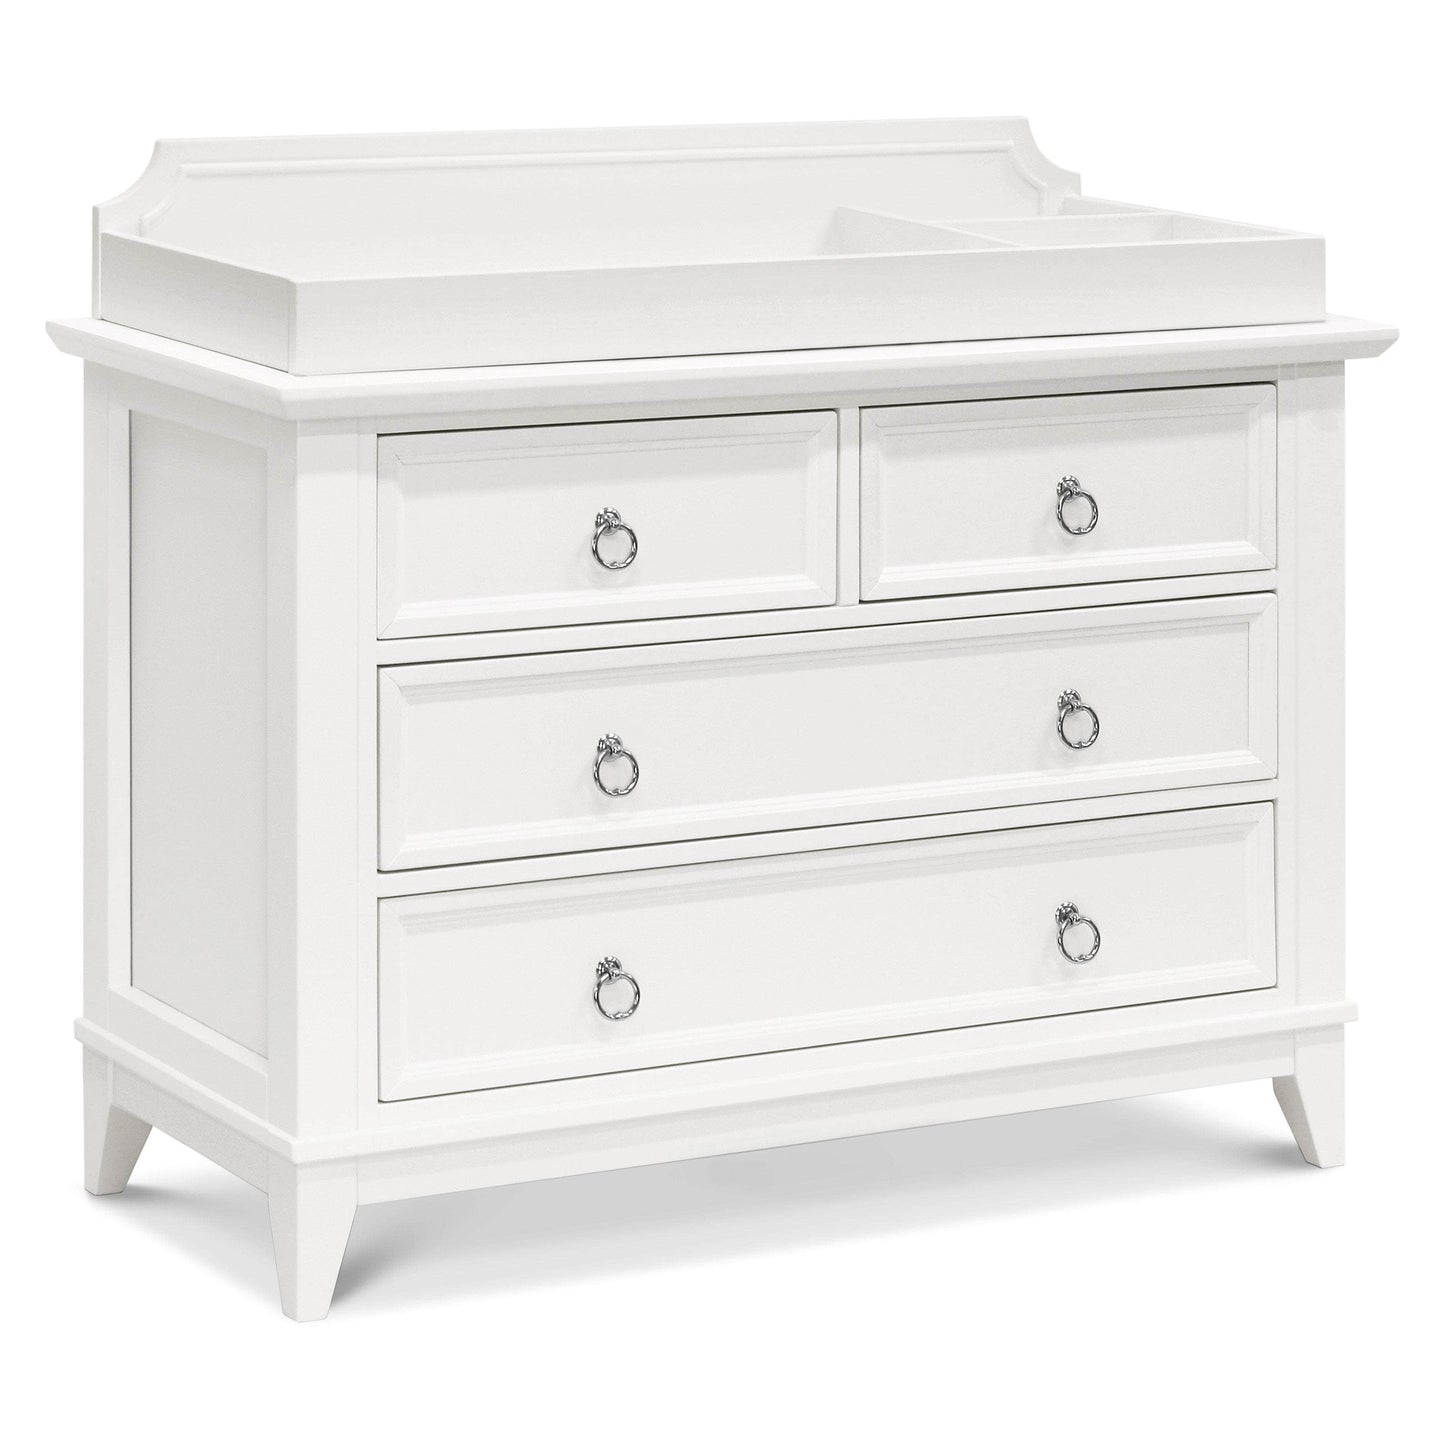 M10716RW,Emma Regency 4-Drawer Dresser in Warm White